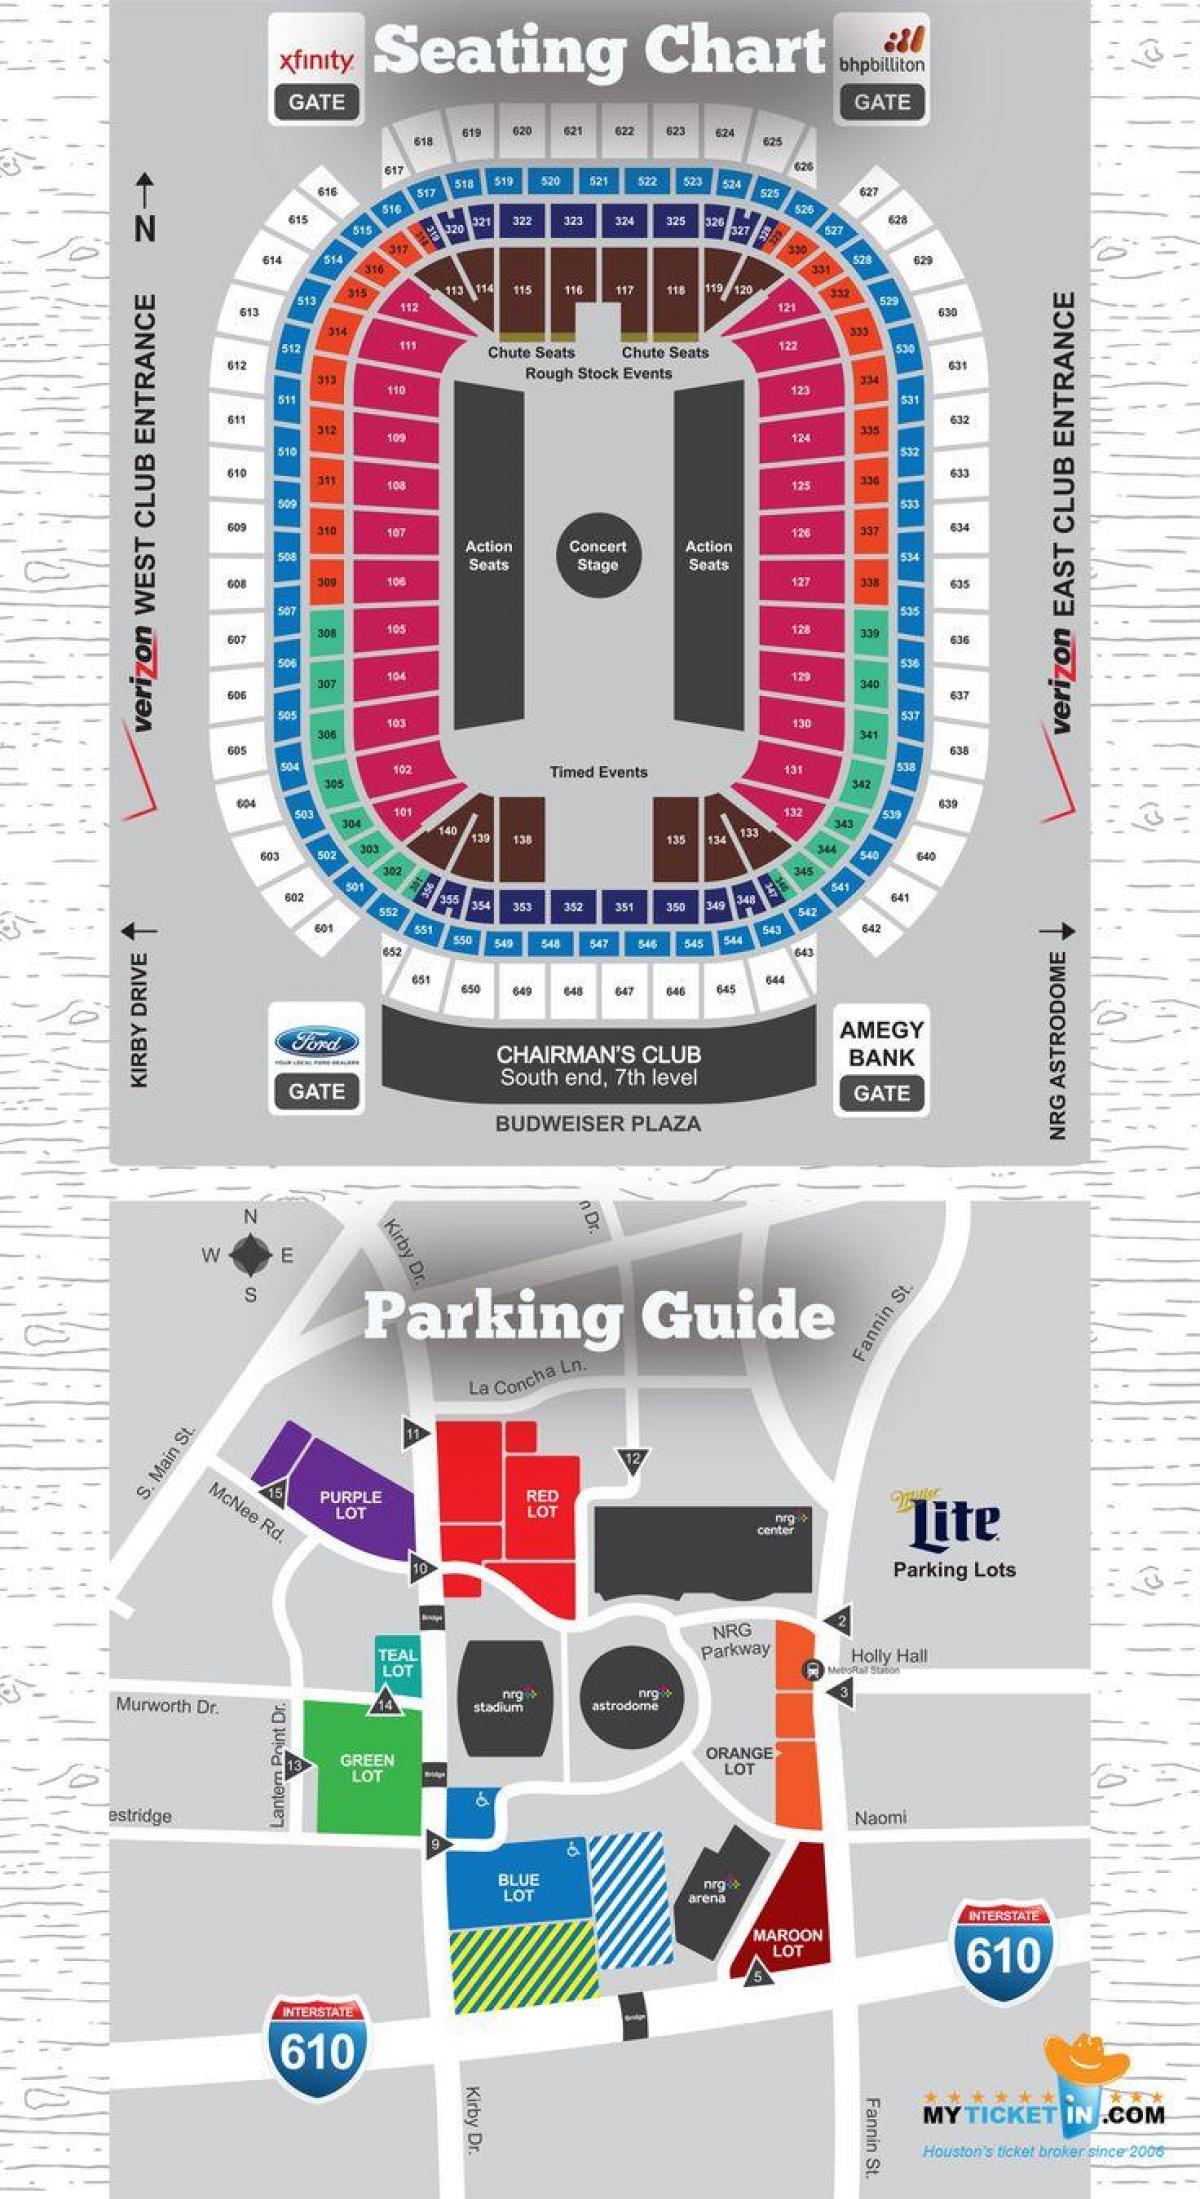 NRG park map - Reliant stadium parking map (Texas - USA)